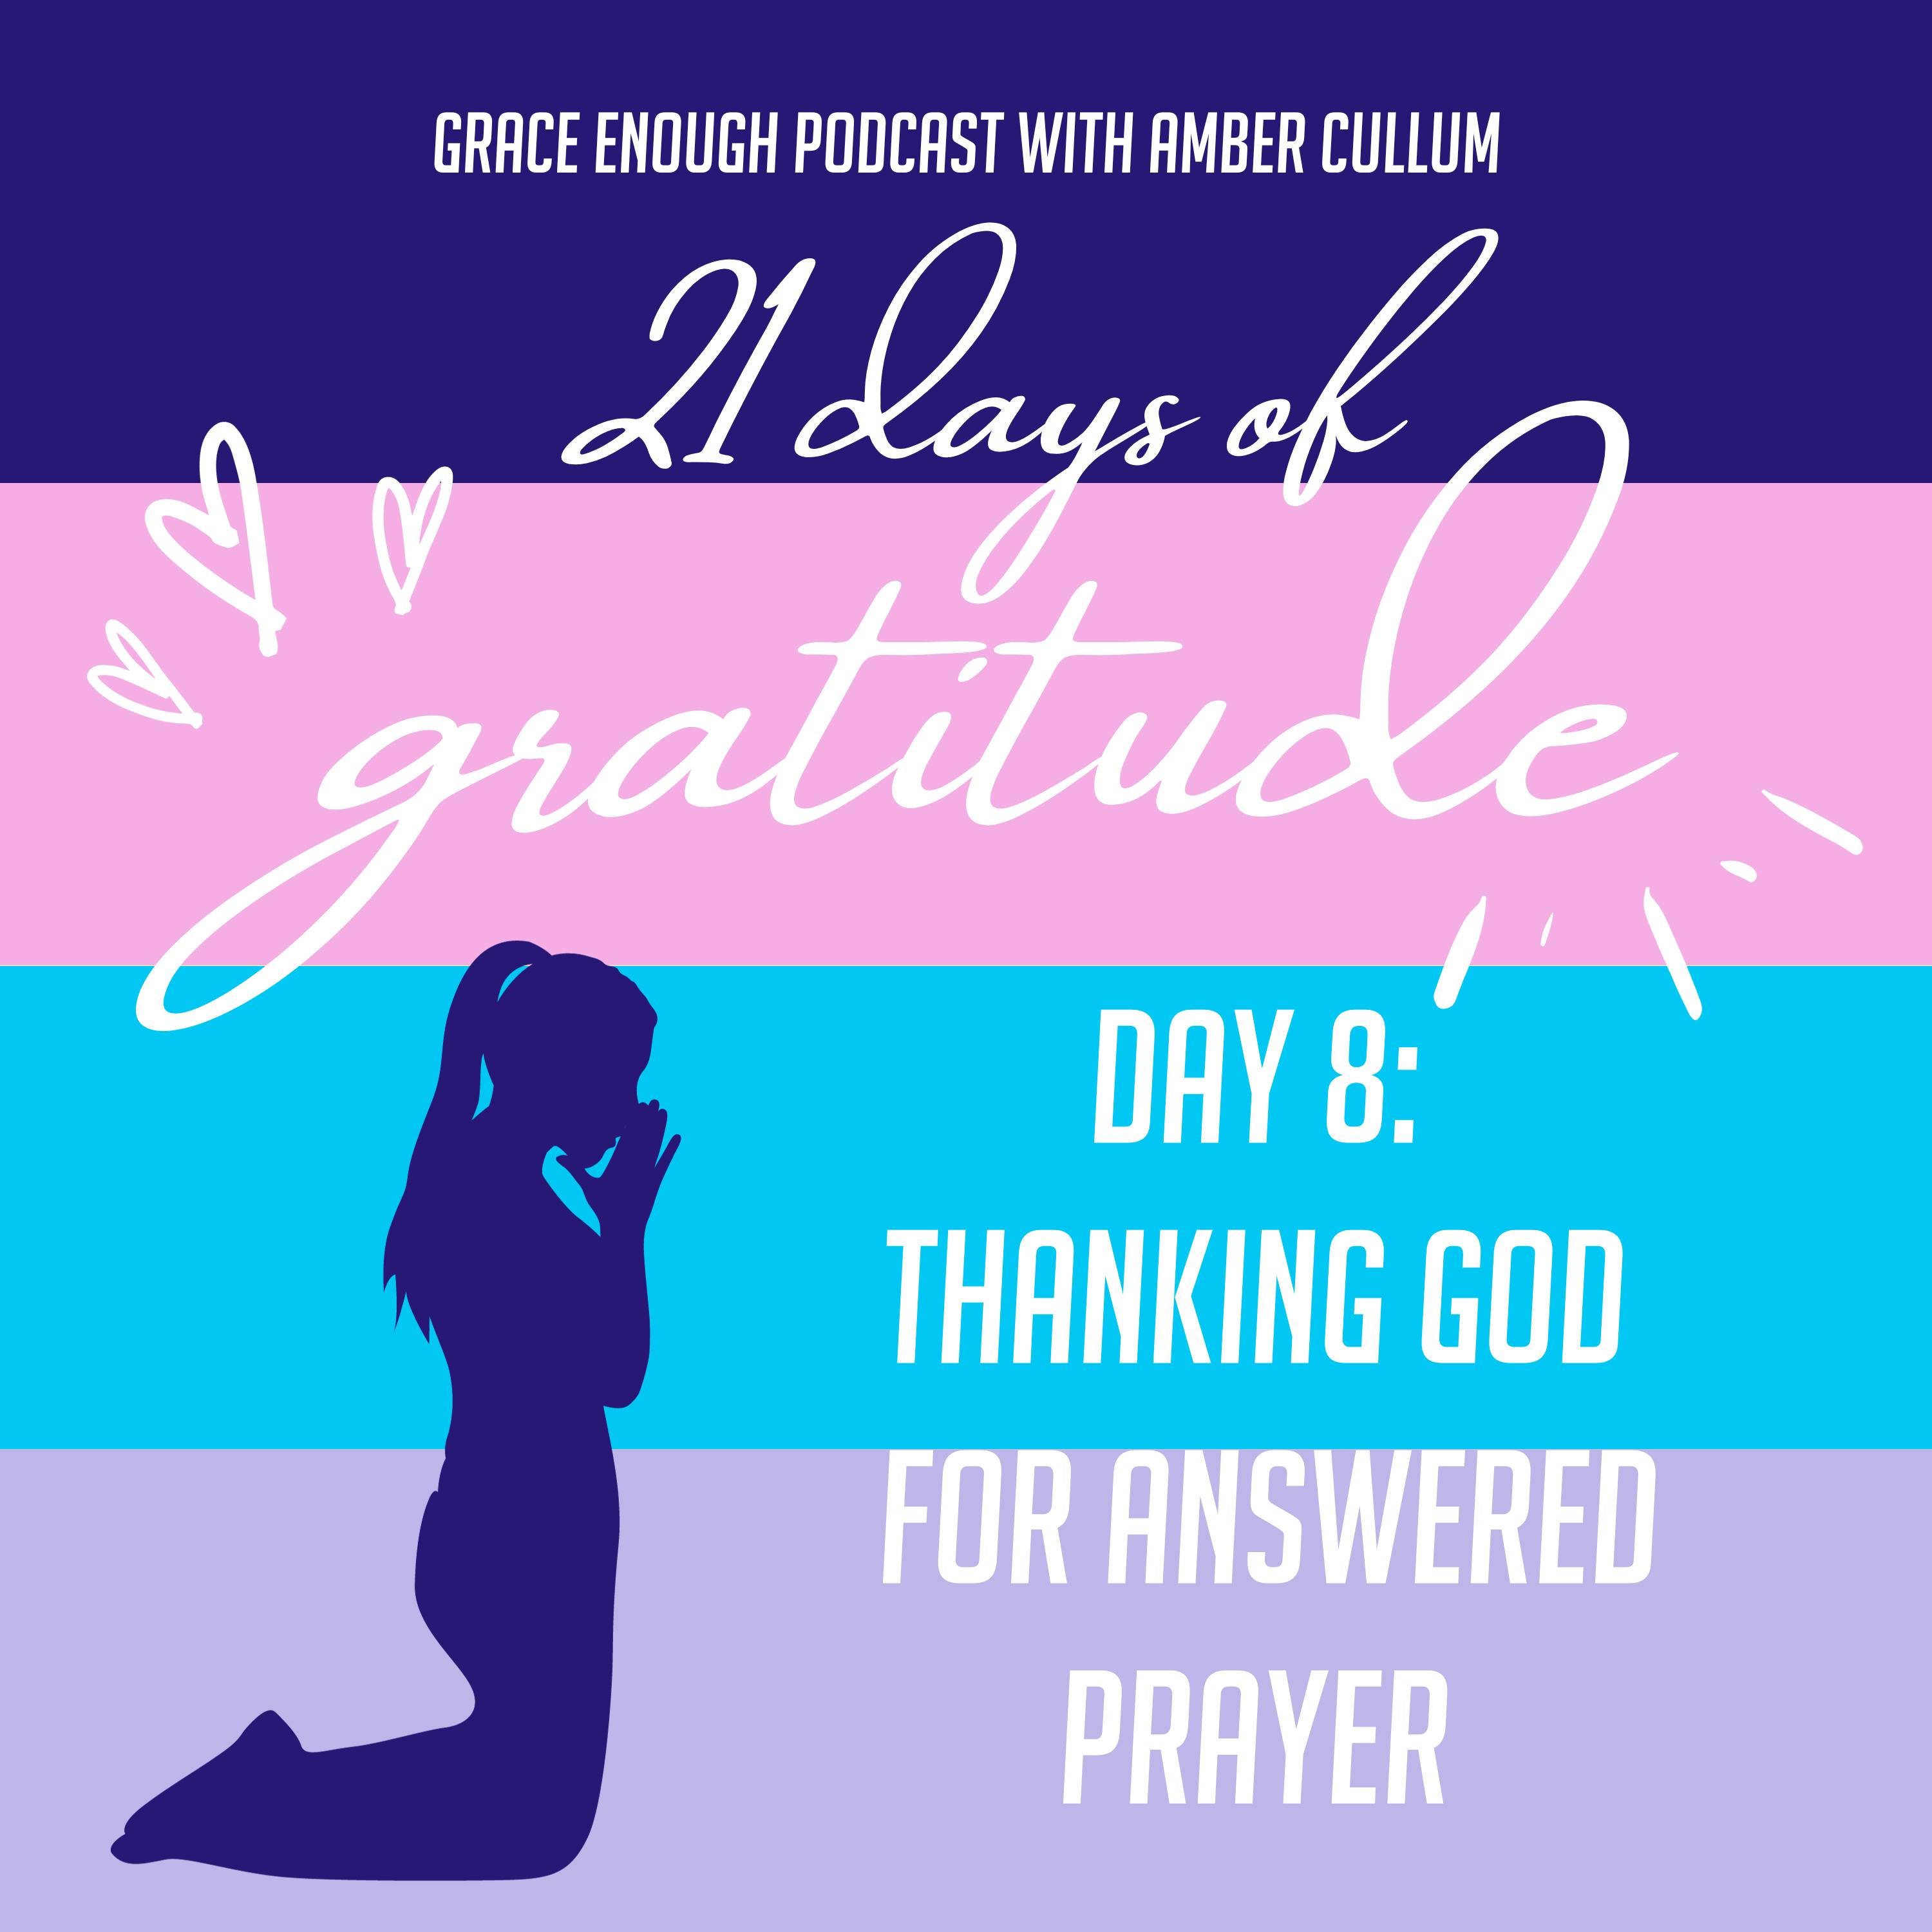 8/21 Days of Gratitude: Thanking God For Answered Prayer